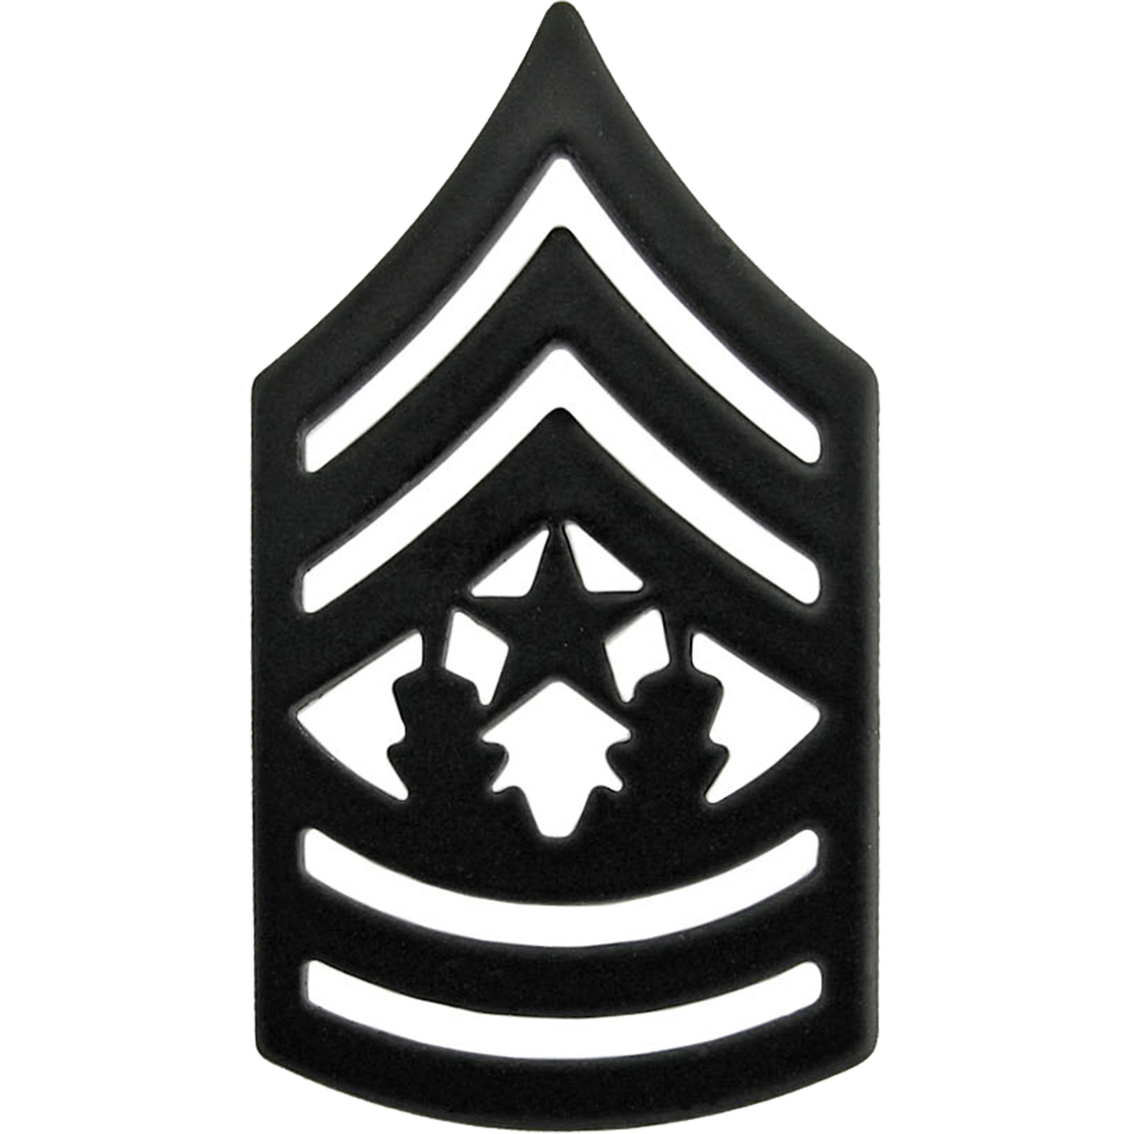 Army csm rank clipart